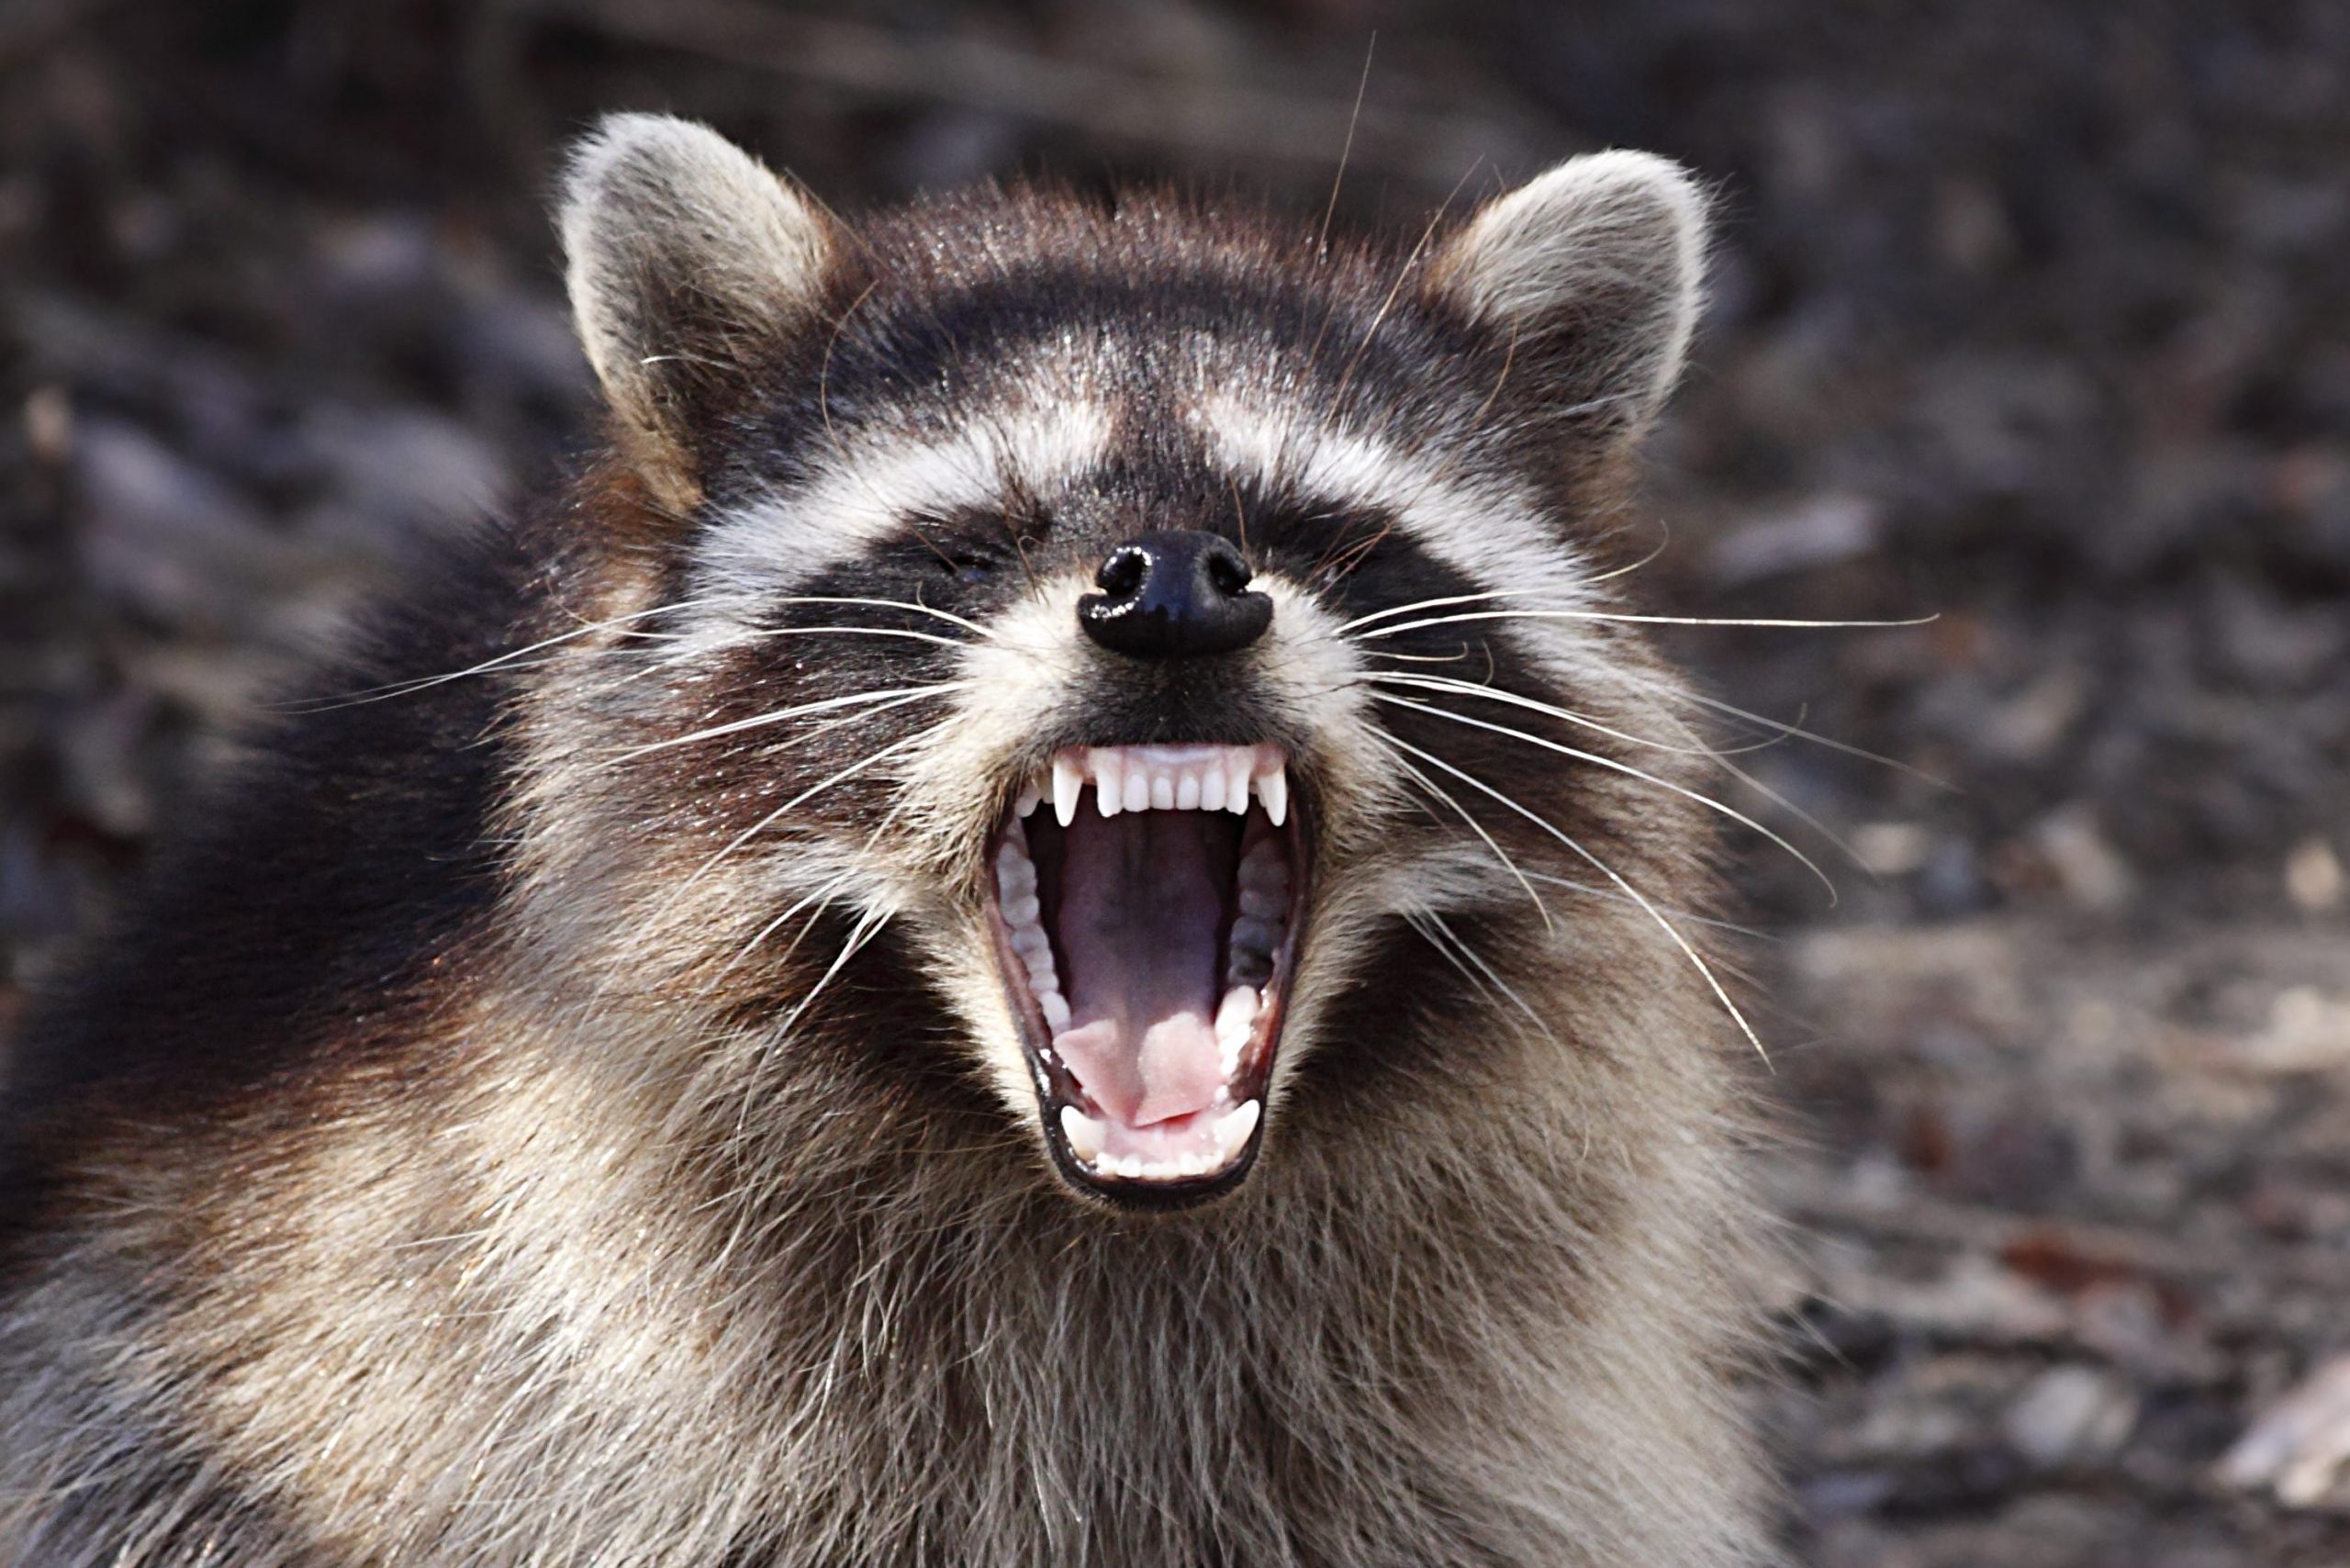 Raccoon with attitude